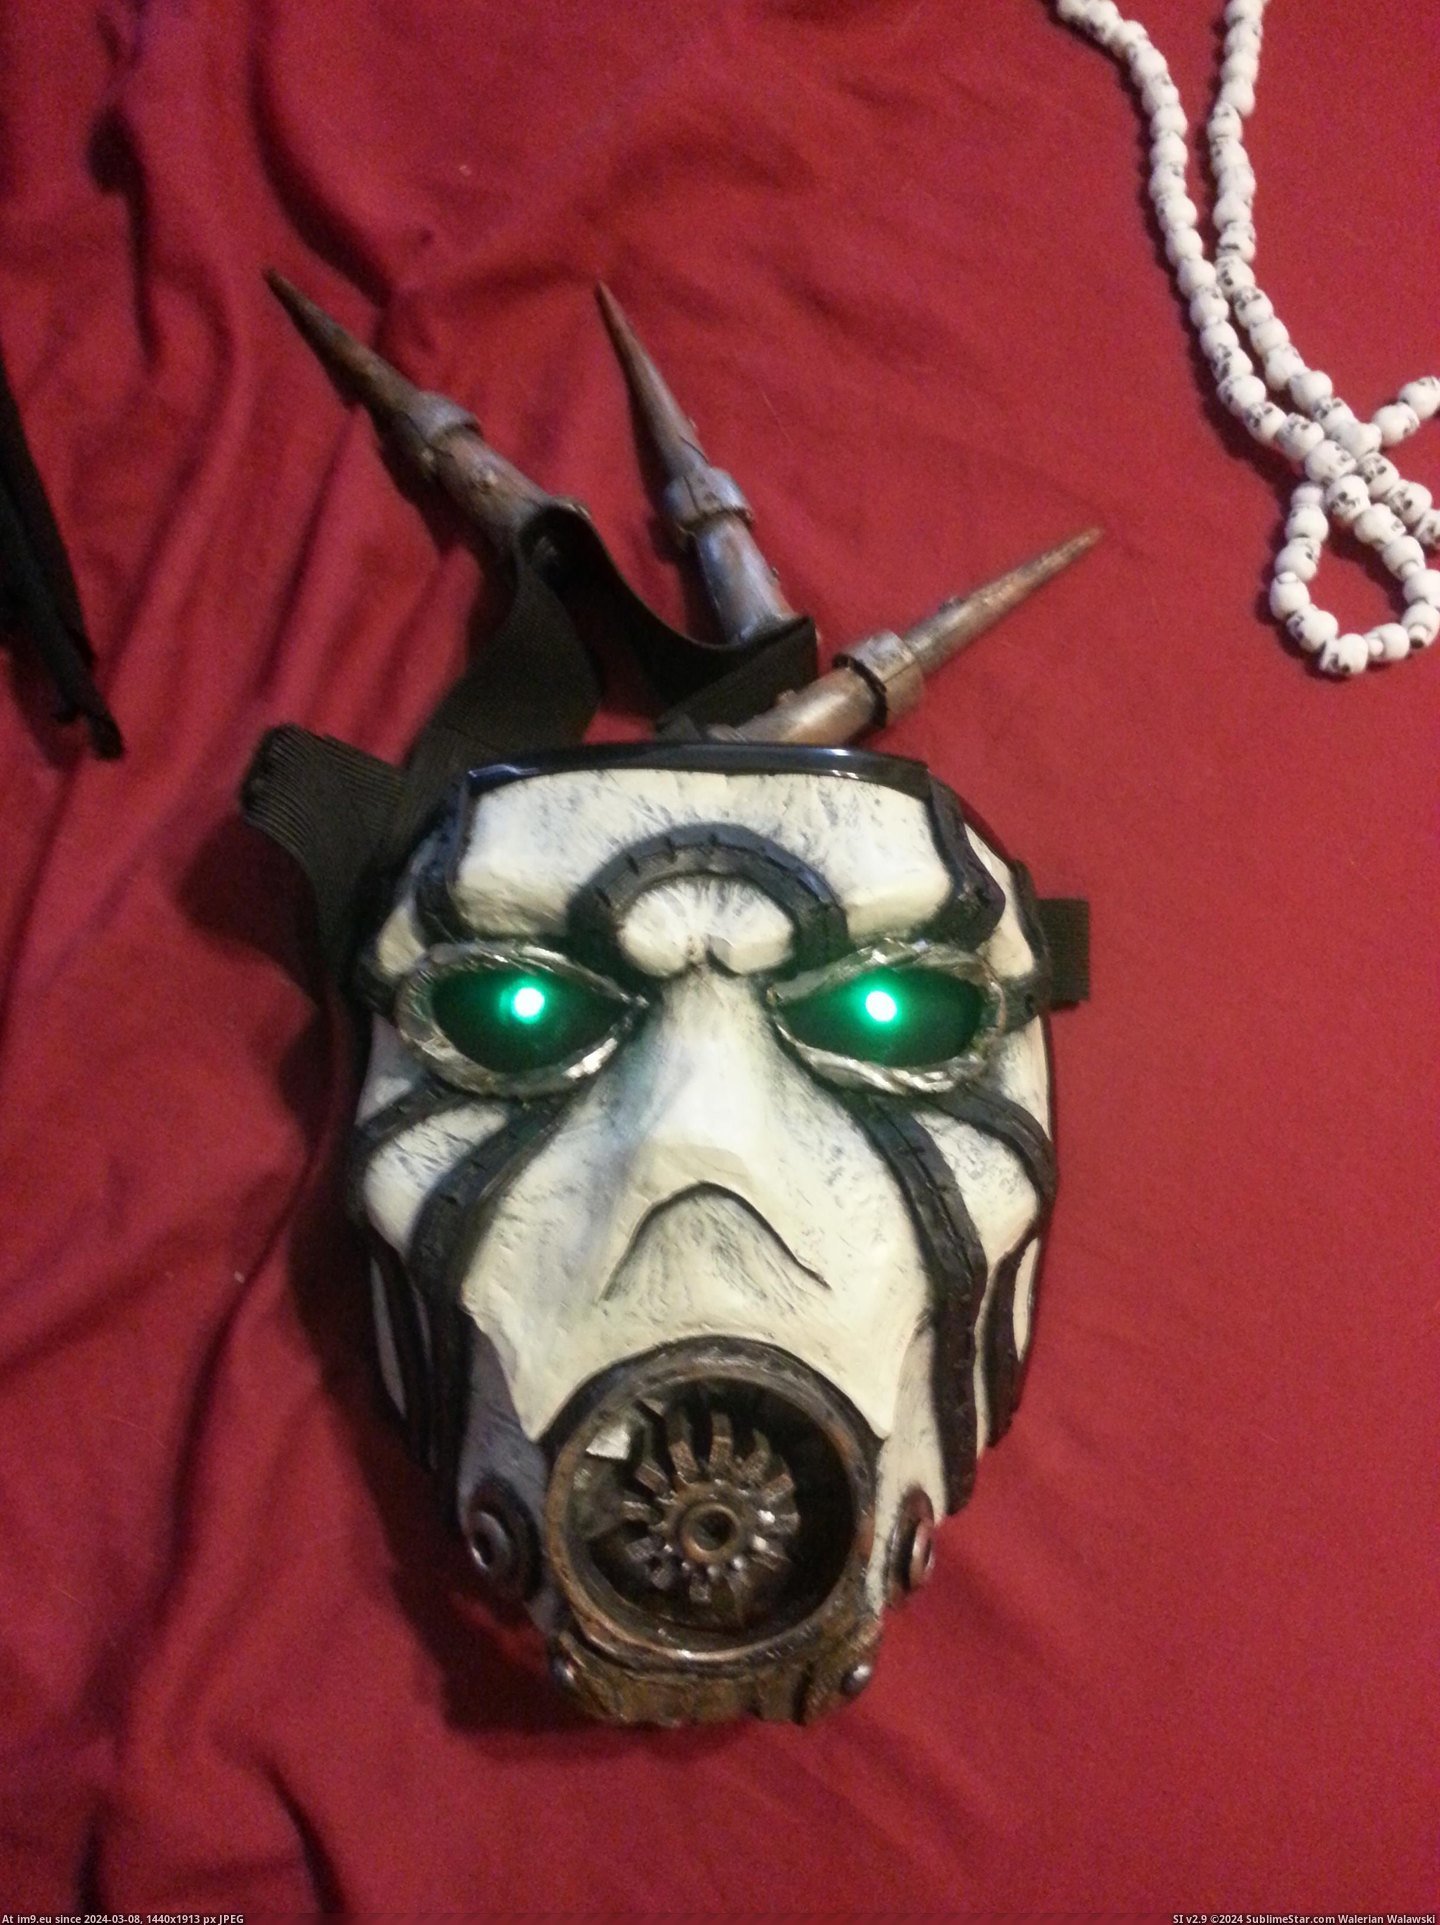 #Gaming #Psycho #Mask [Gaming] My custom psycho mask Pic. (Image of album My r/GAMING favs))